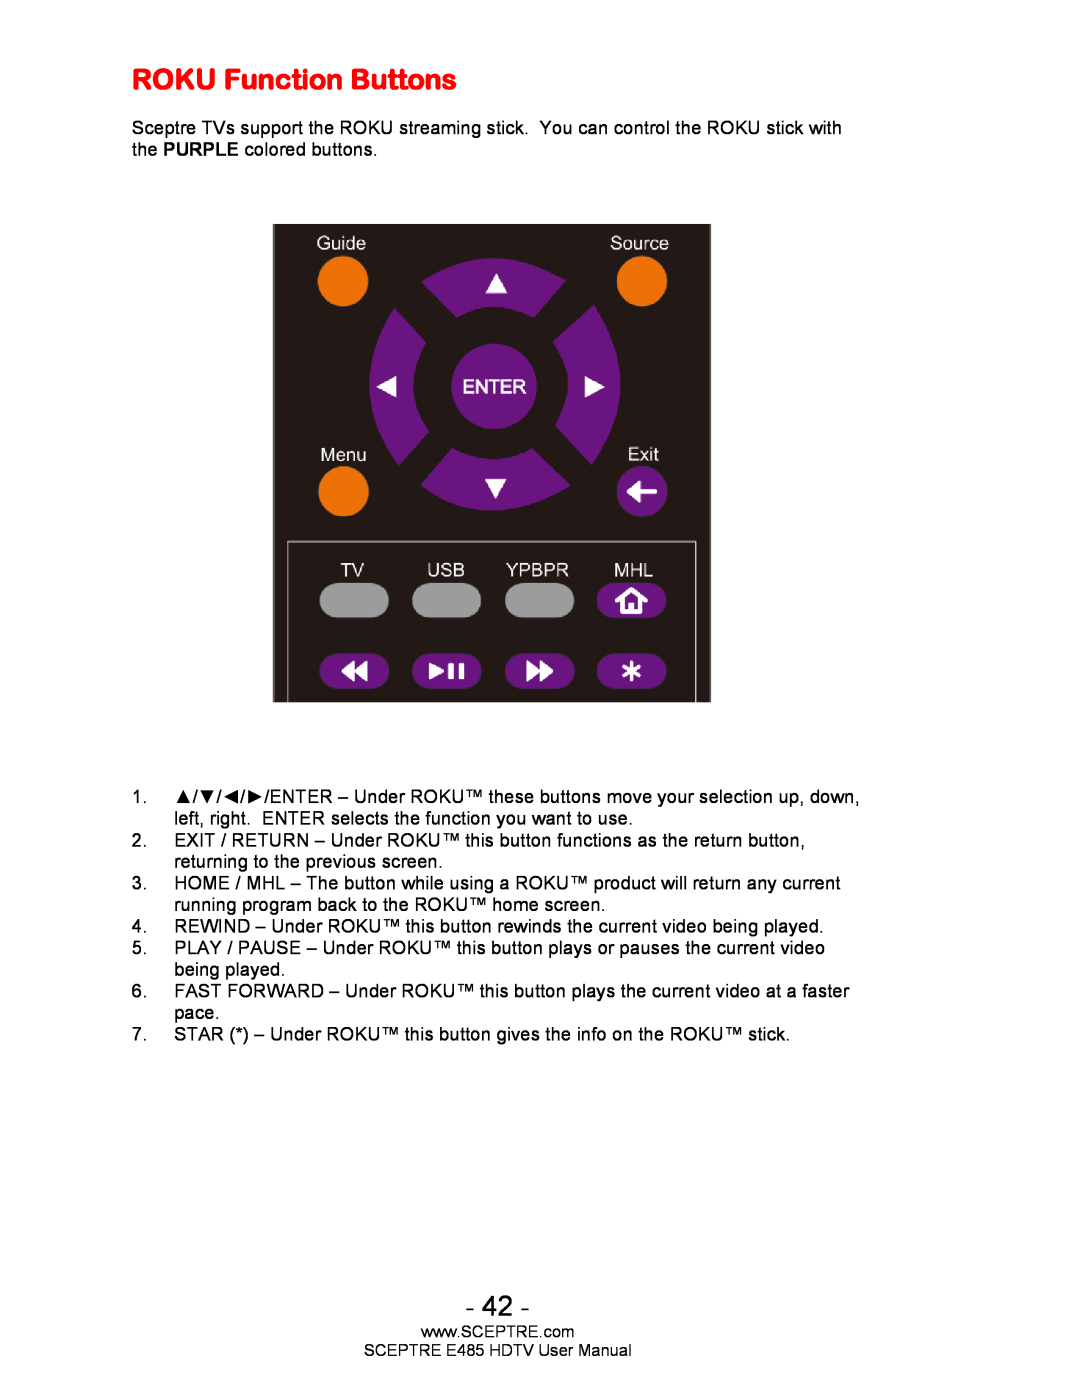 Sceptre Technologies E485 user manual ROKU Function Buttons 